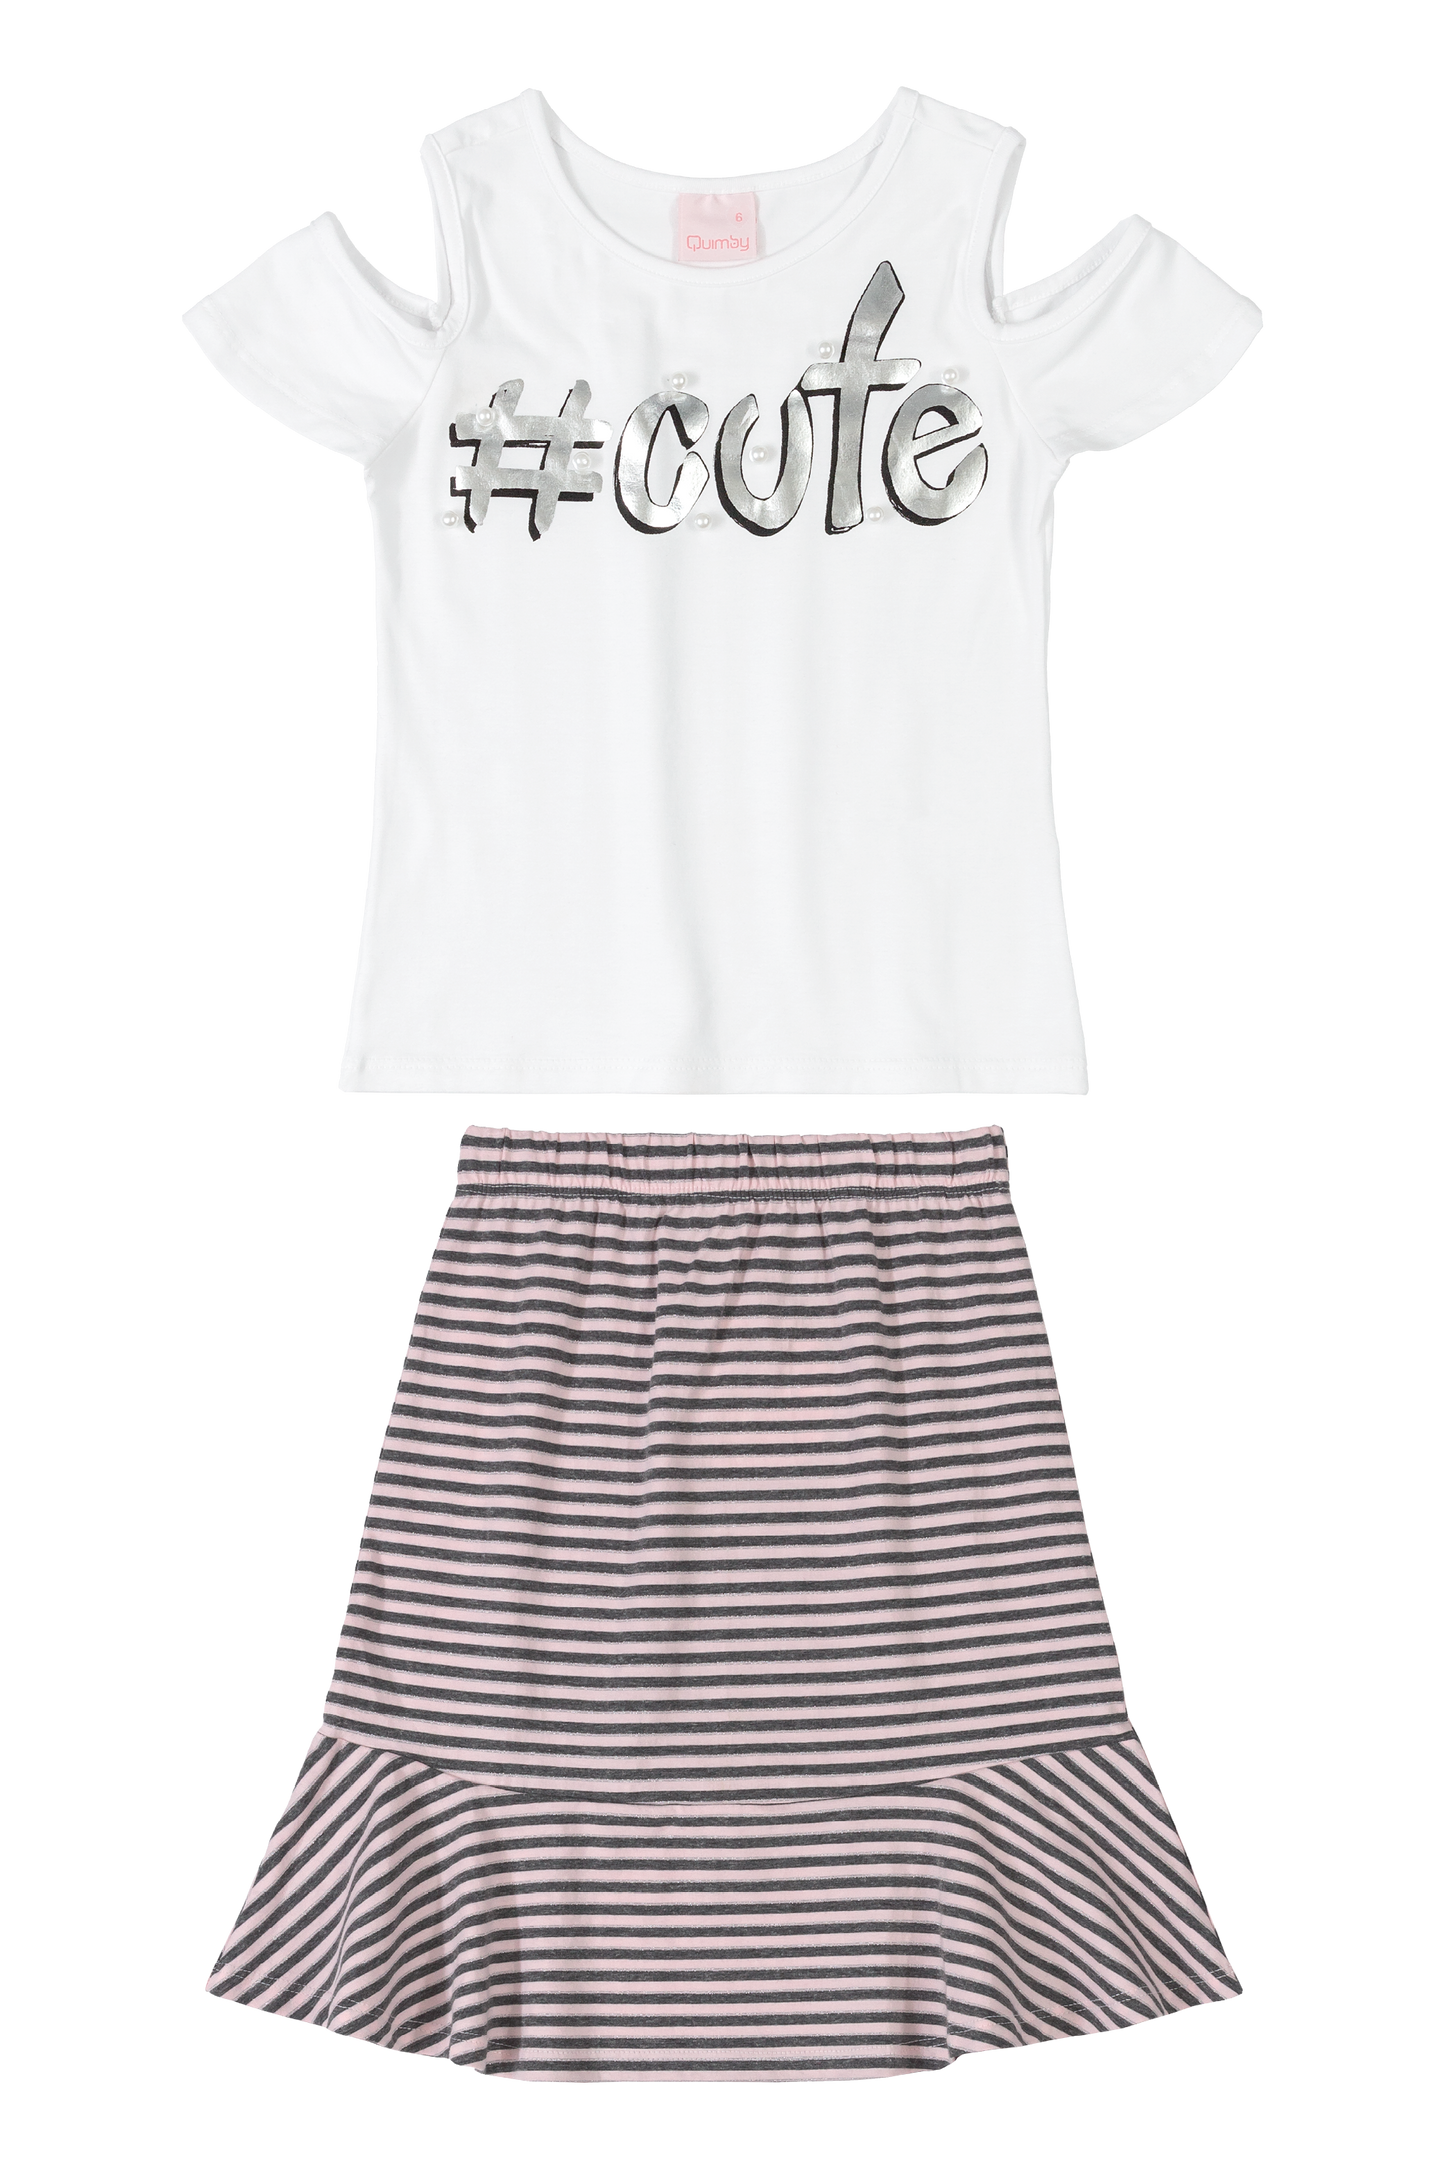 Cute Top & Stripe Skirt